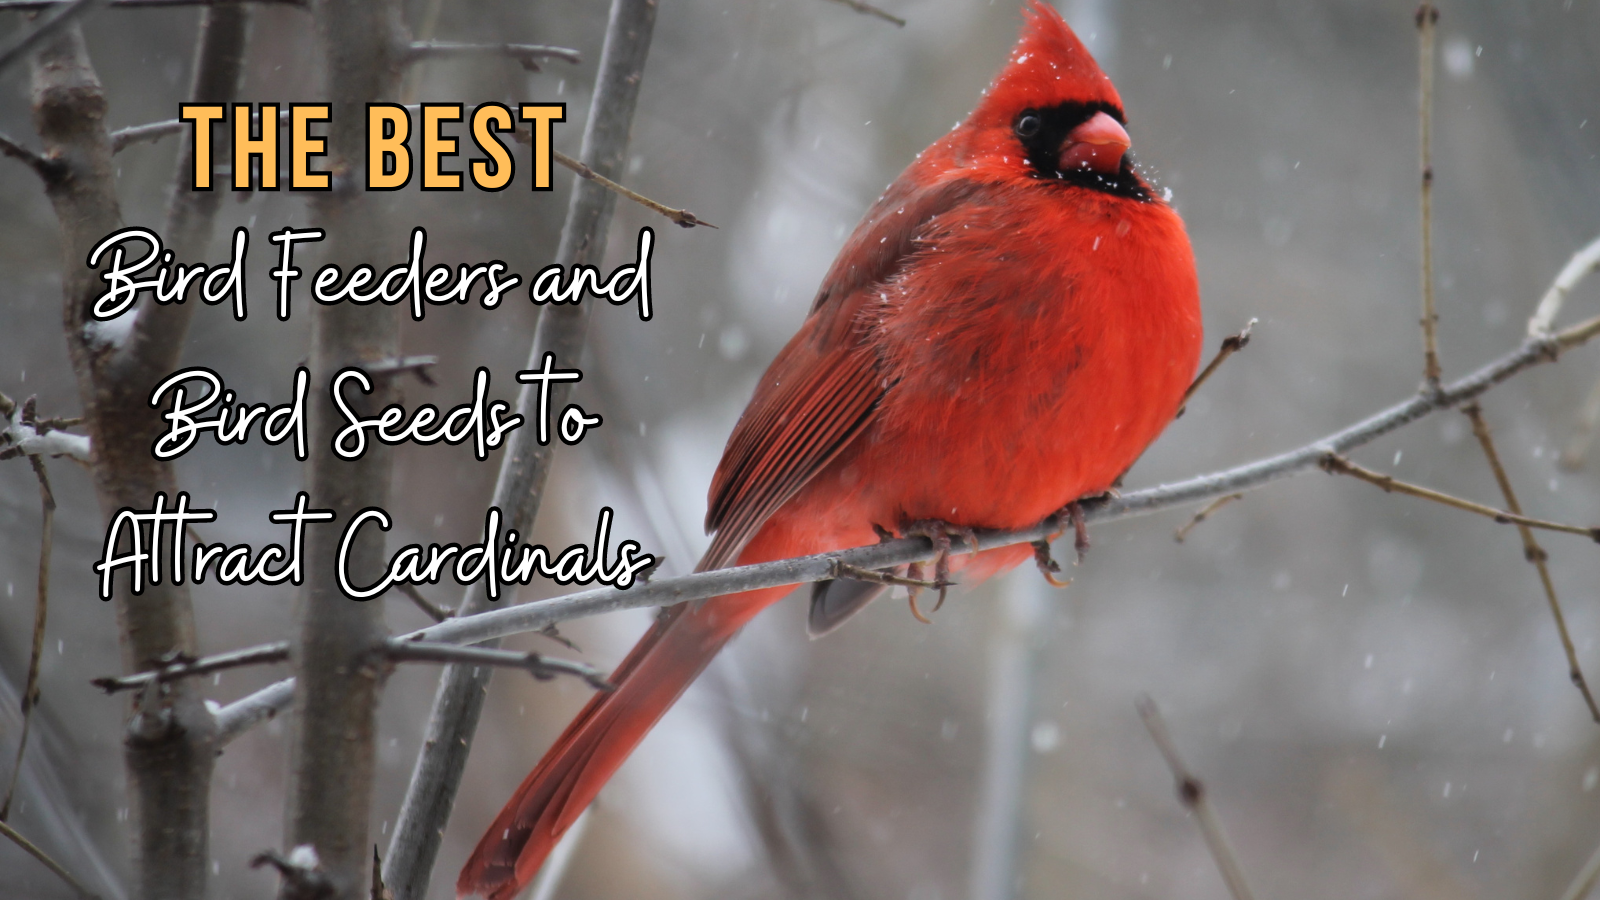 Bird Feeders and Bird Seeds to Attract Cardinals